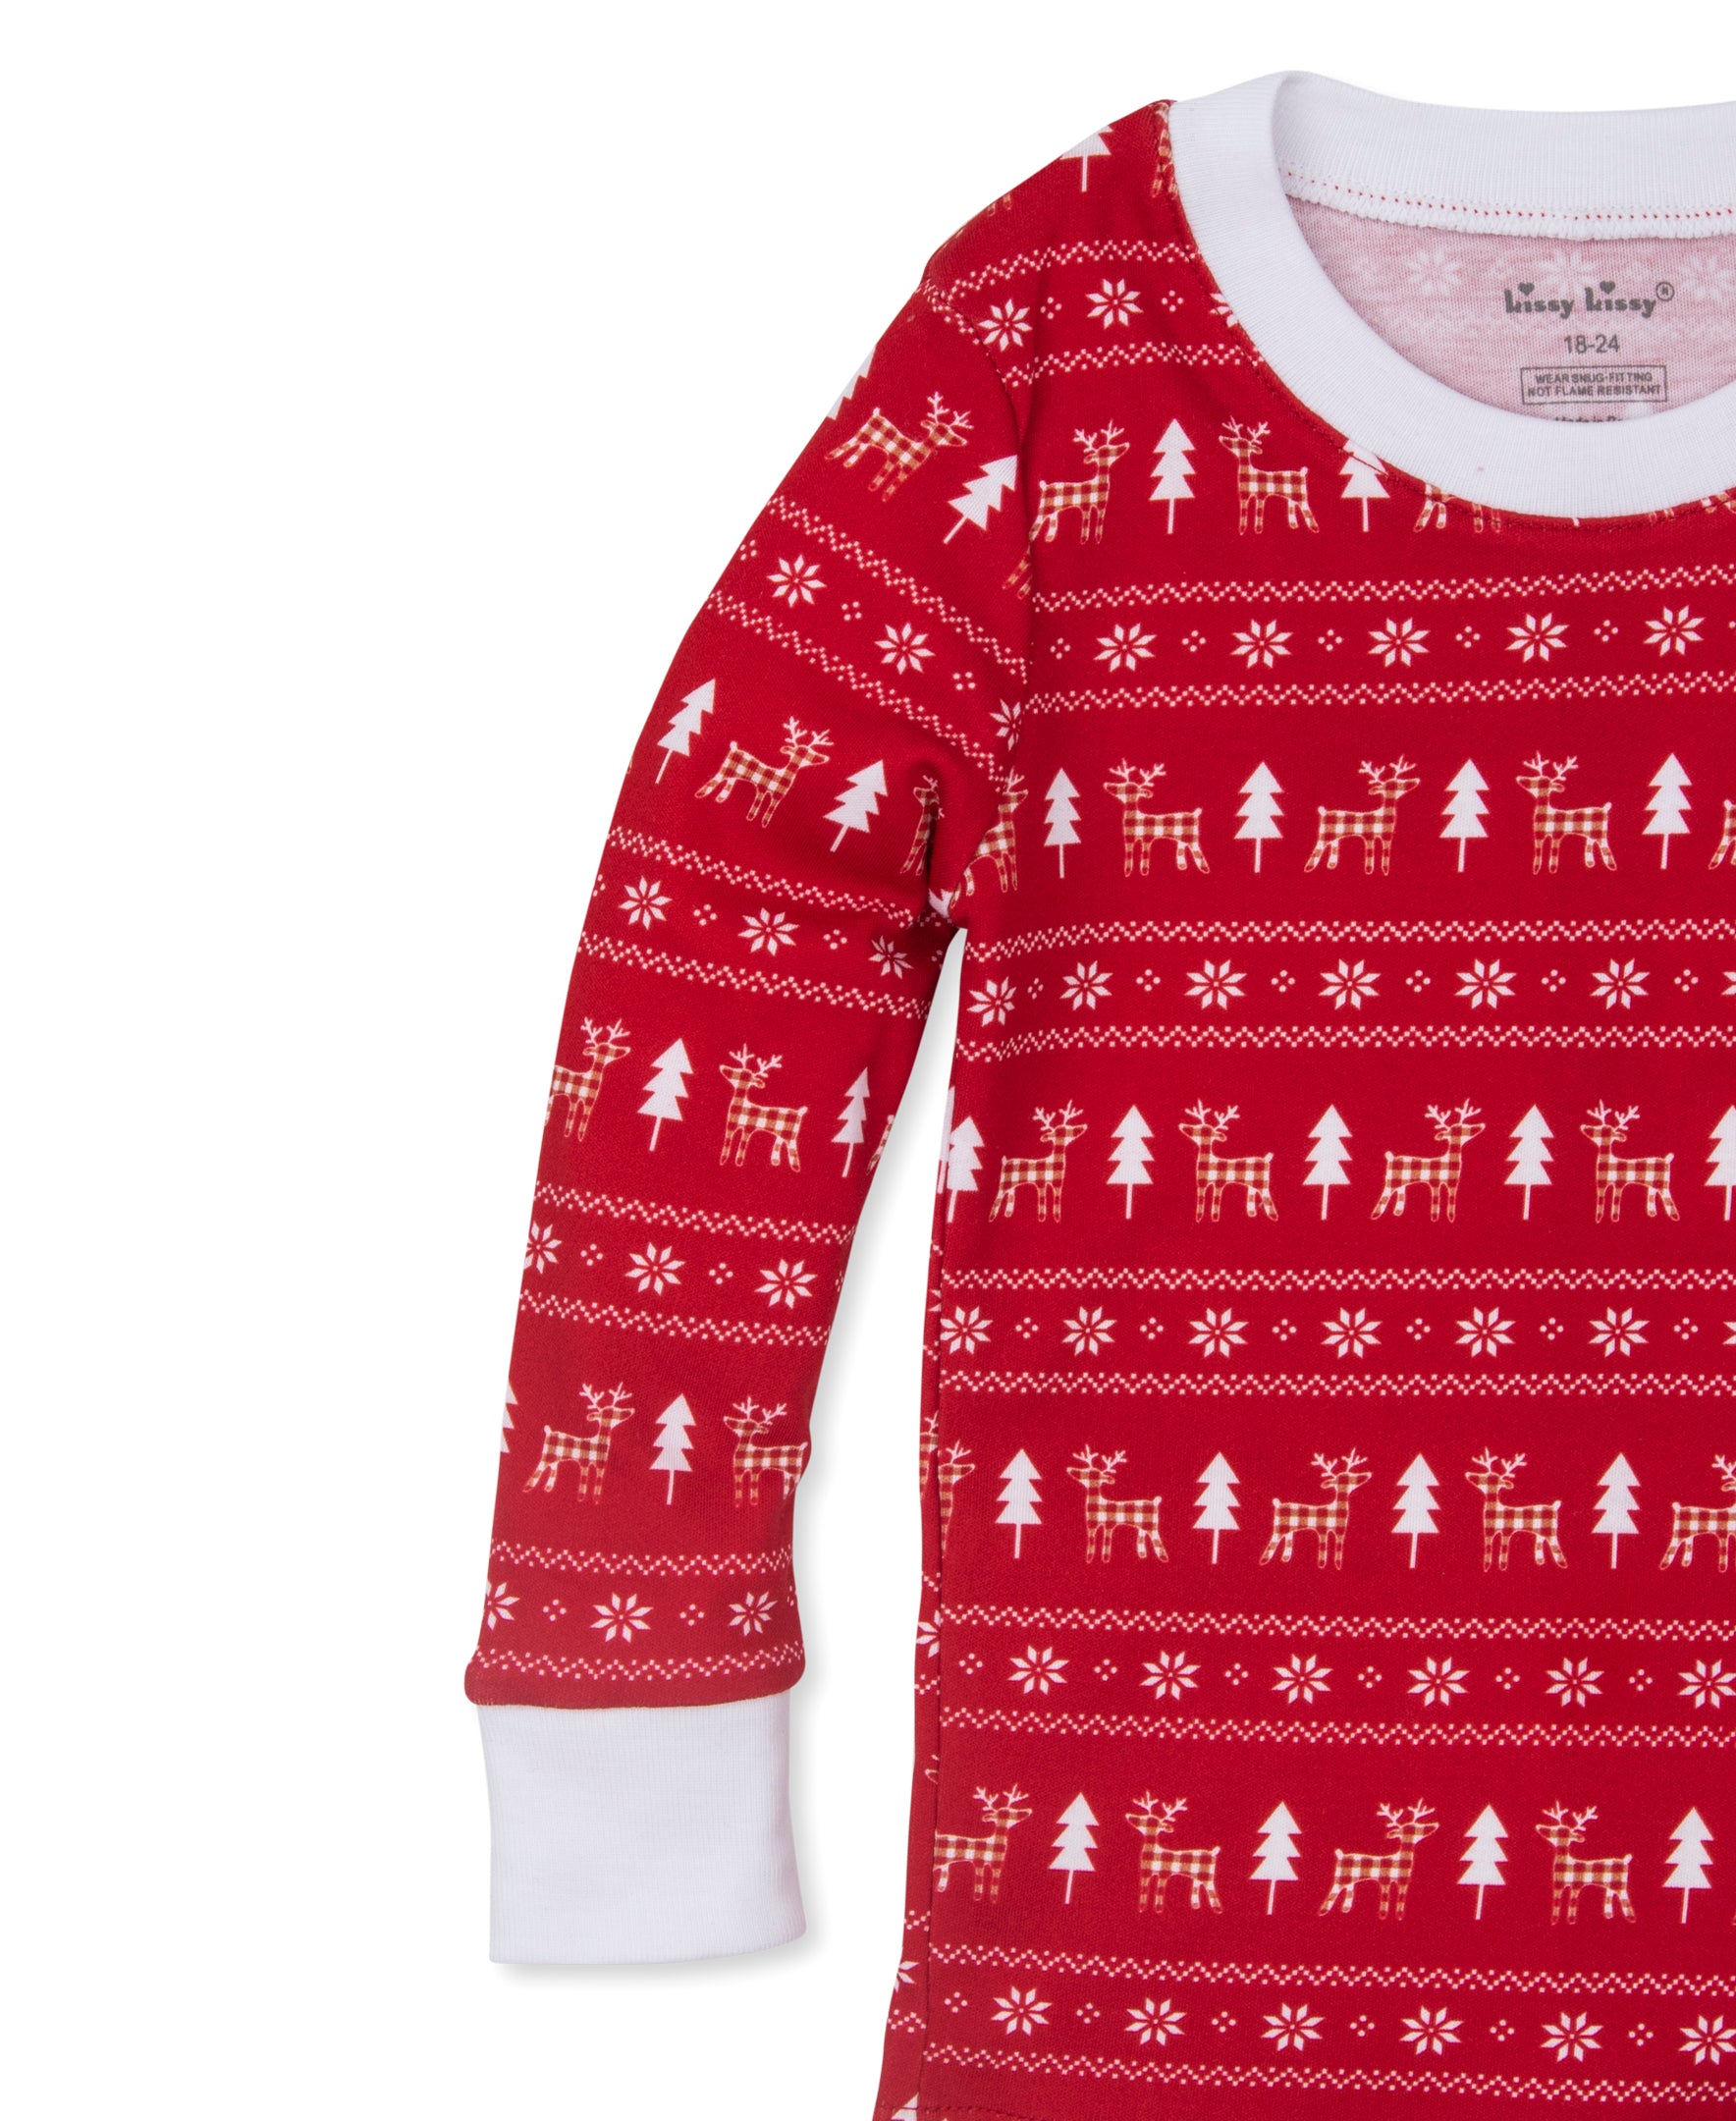 Christmas Reindeer Pajama Set (12M-24M) - Kissy Kissy